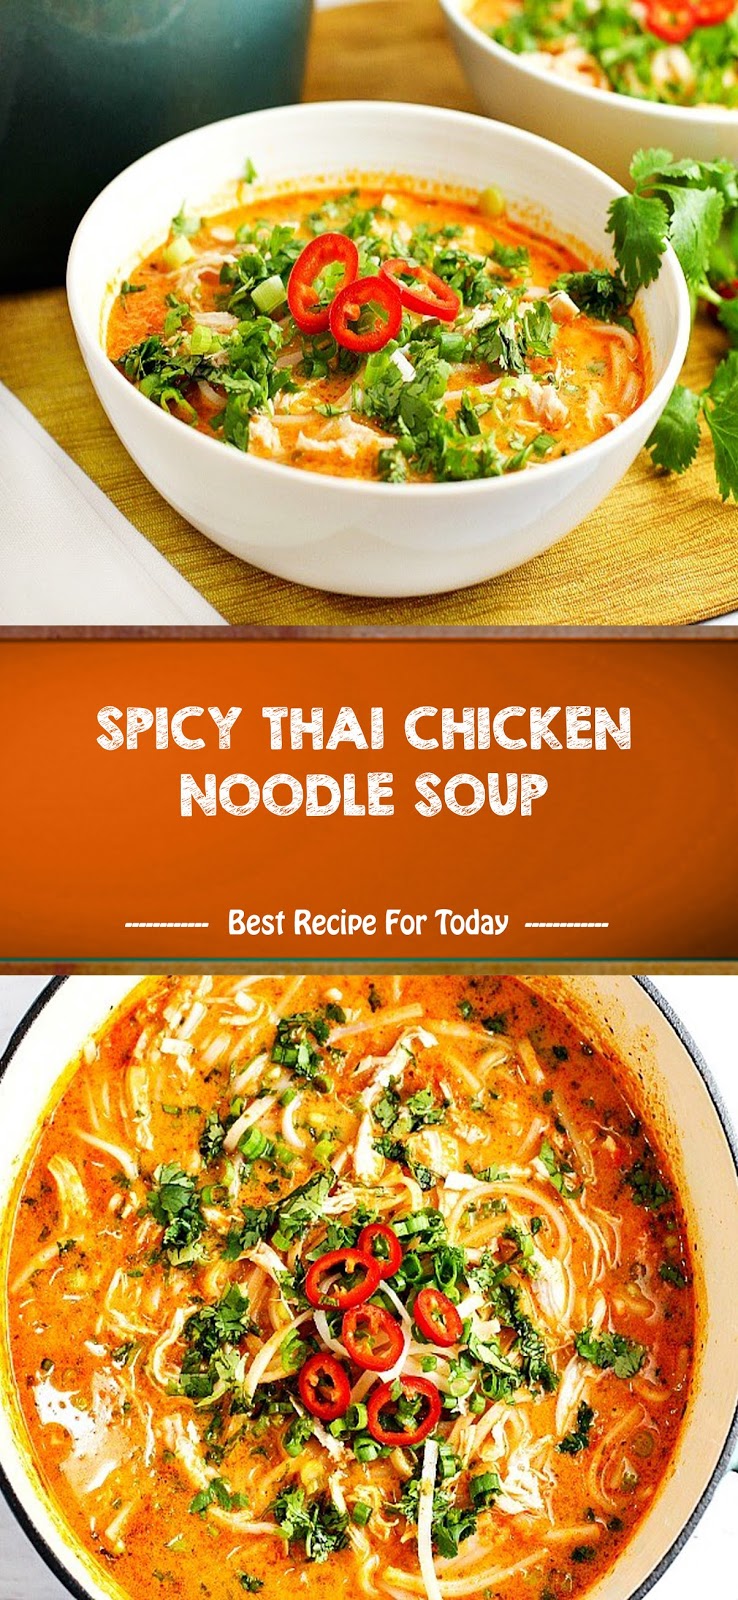 BEST RECIPES SPICY THAI CHICKEN NOODLE SOUP | Healthyrecipes-04